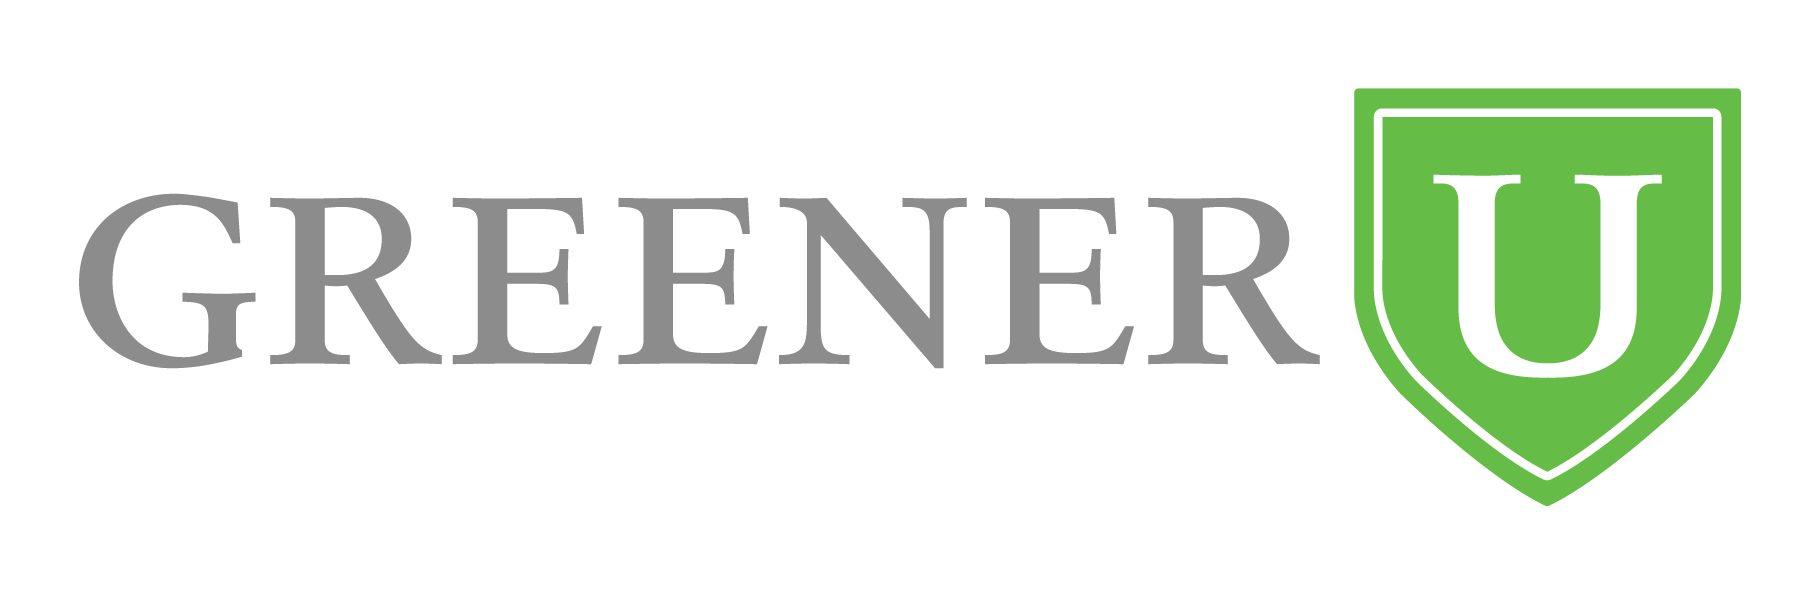 GreenerU logo